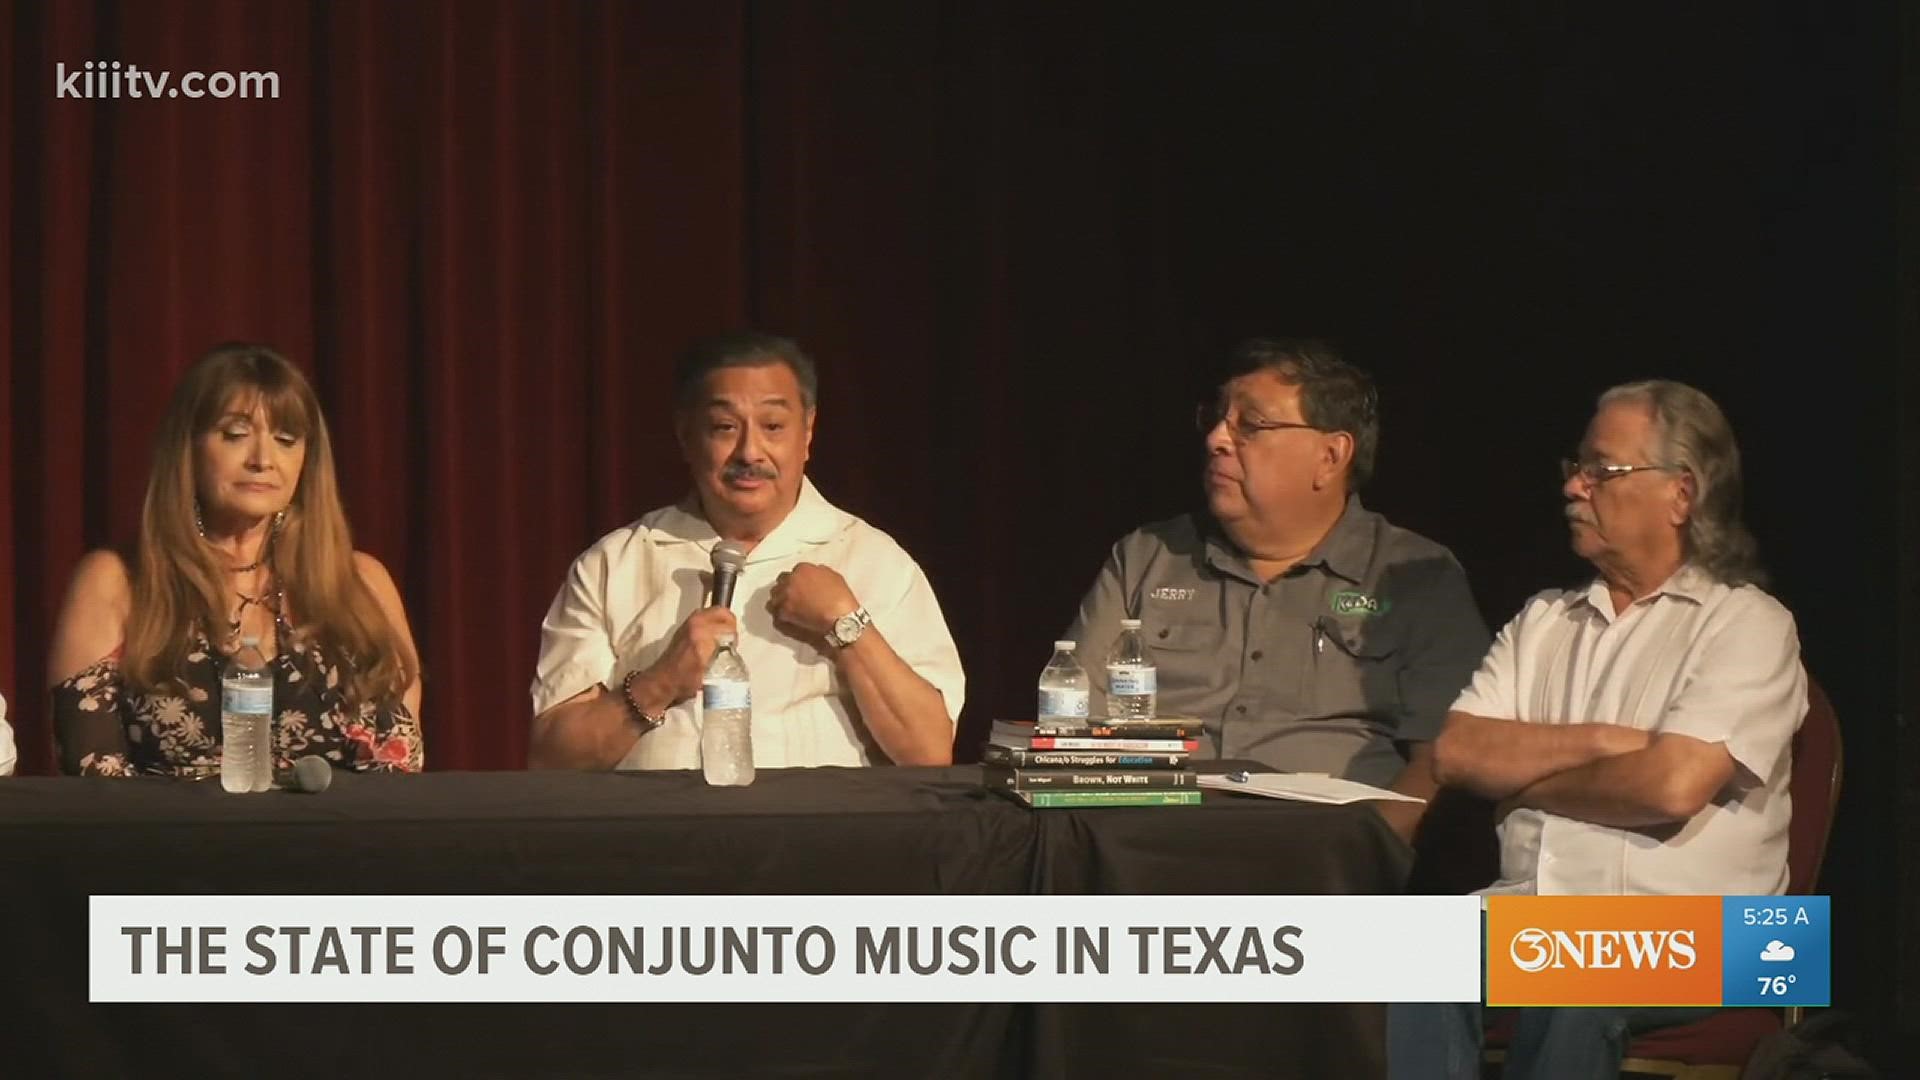 Rudy was a guest speaker at the Guadalupe Cultural Arts Center's 'Tejano Conjunto Festival'.